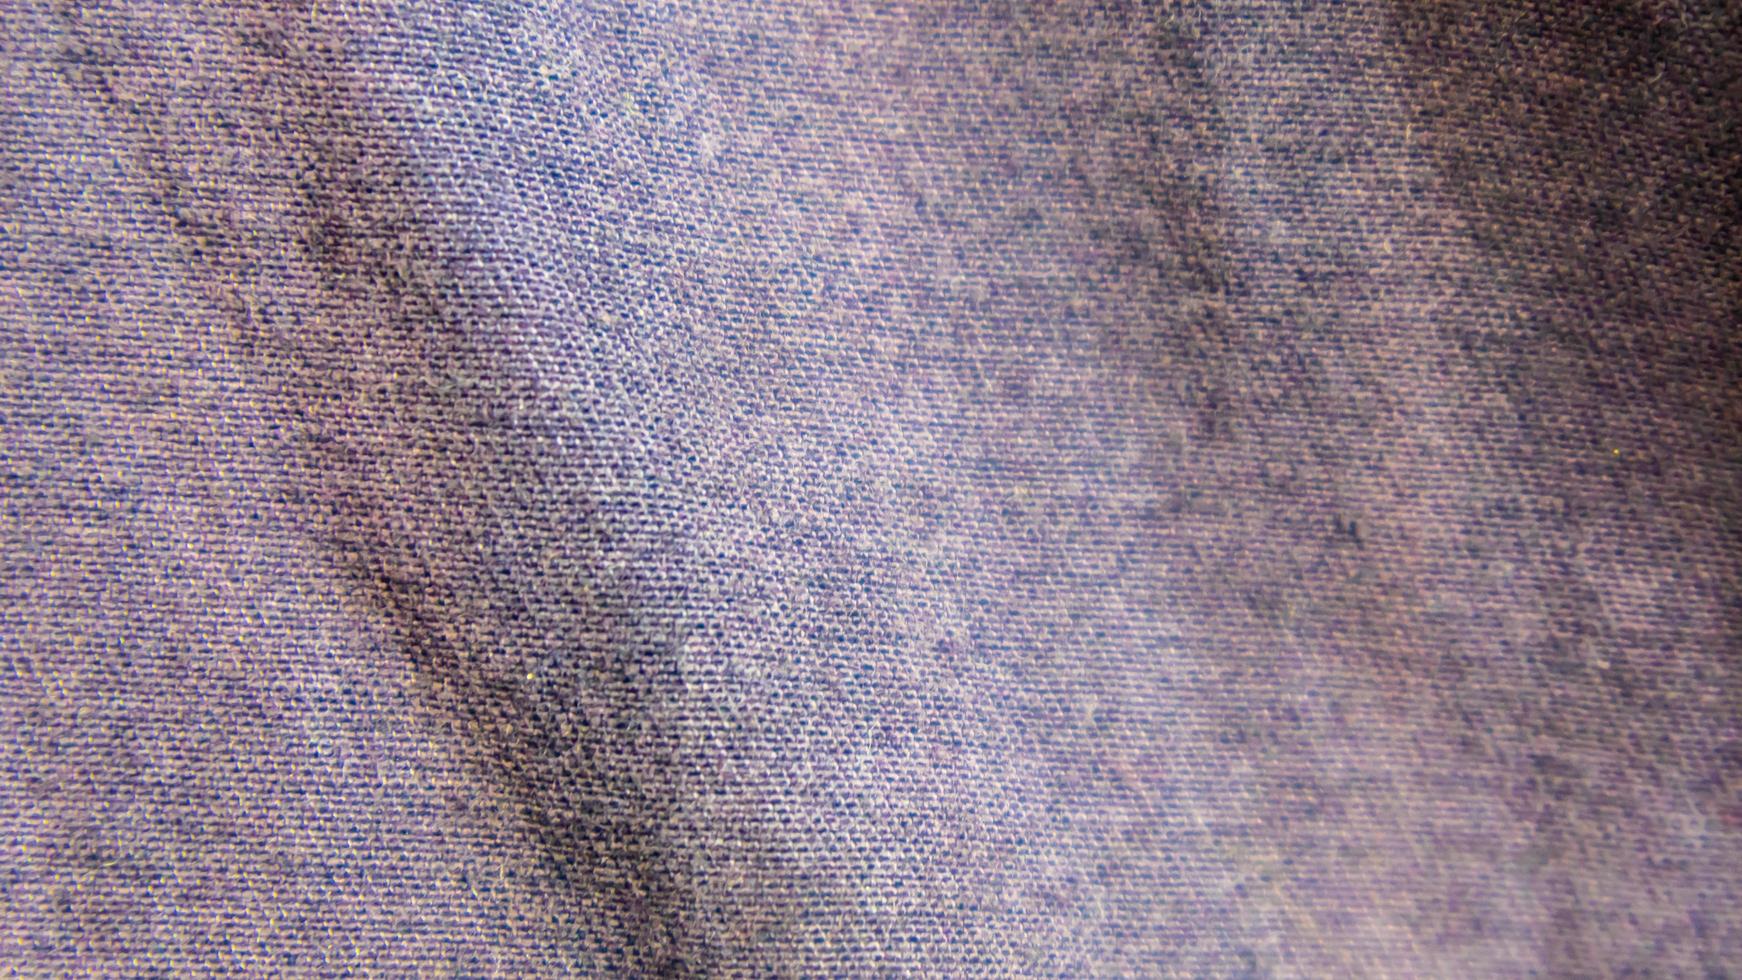 textura de tela marrón como fondo foto